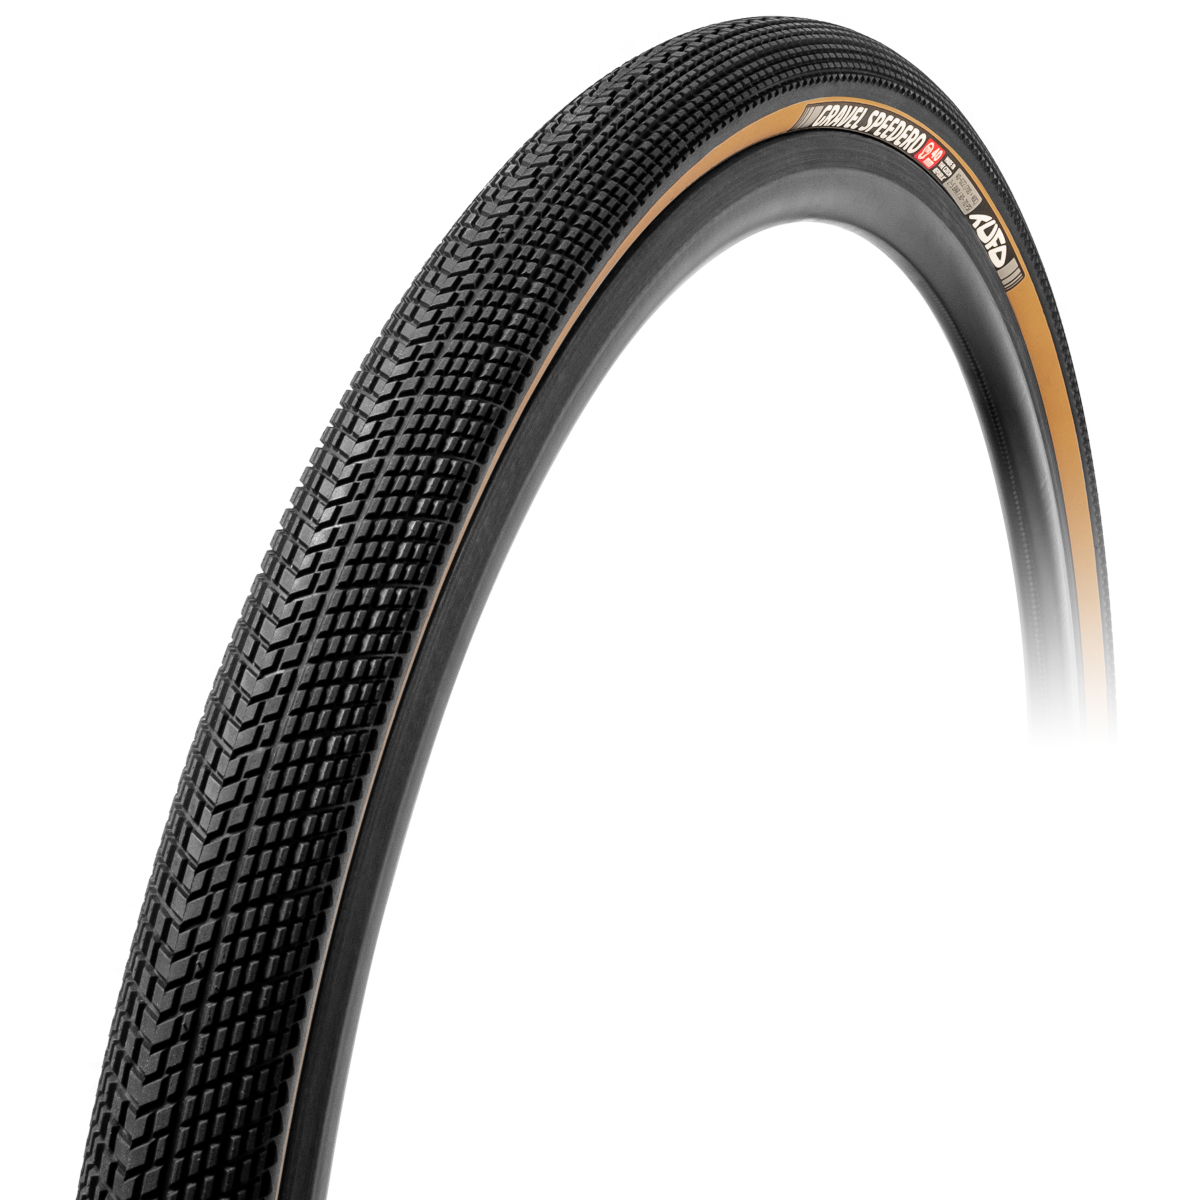 Productfoto van Tufo Gravel Speedero Folding Tire - 36-622 - black/tan